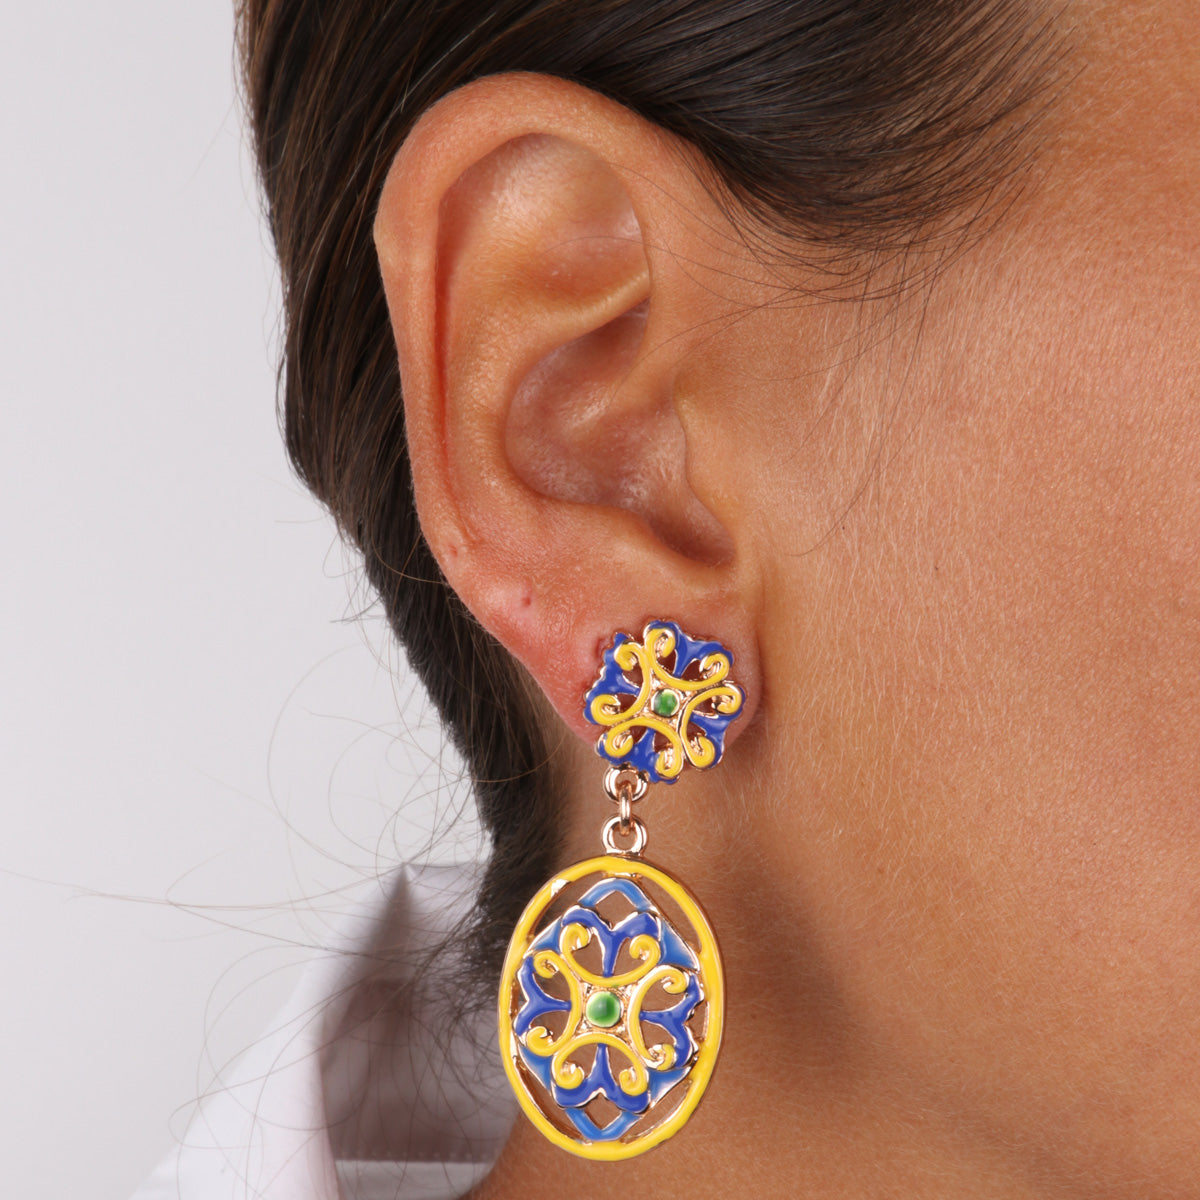 Metal earrings with blue and yellow enamel flower majolica